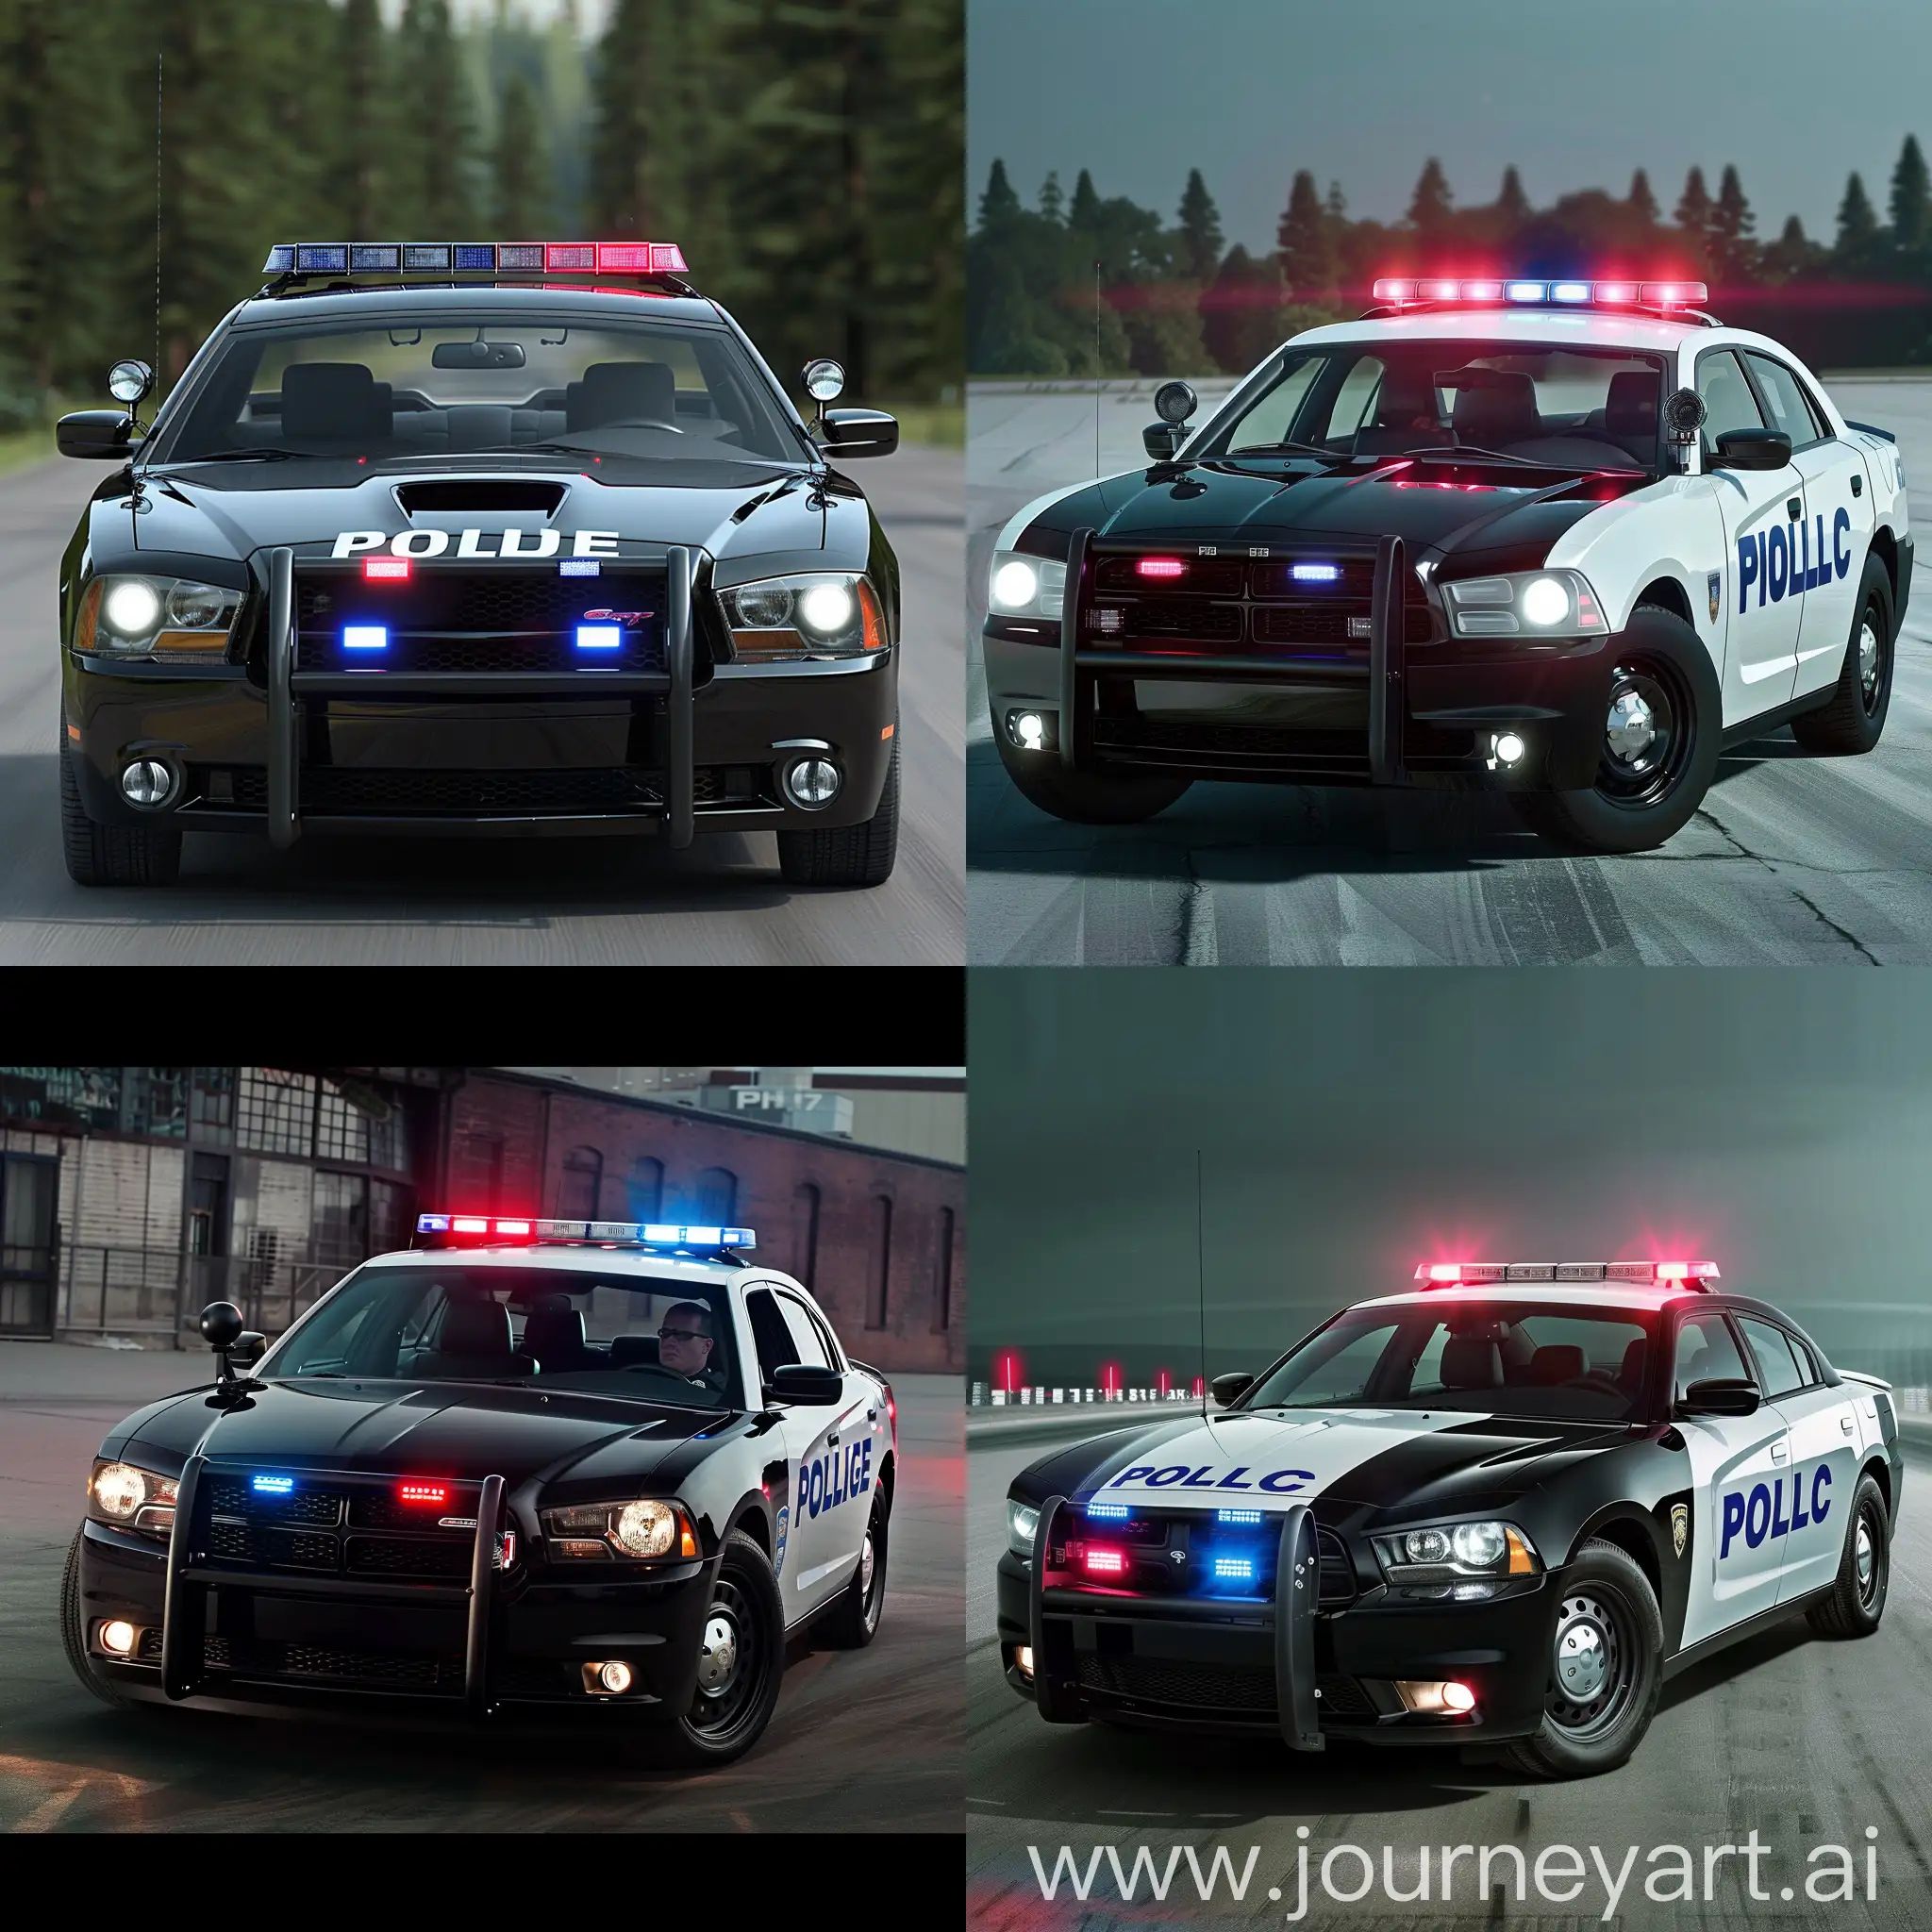 Vibrant-Police-Car-on-Urban-Patrol